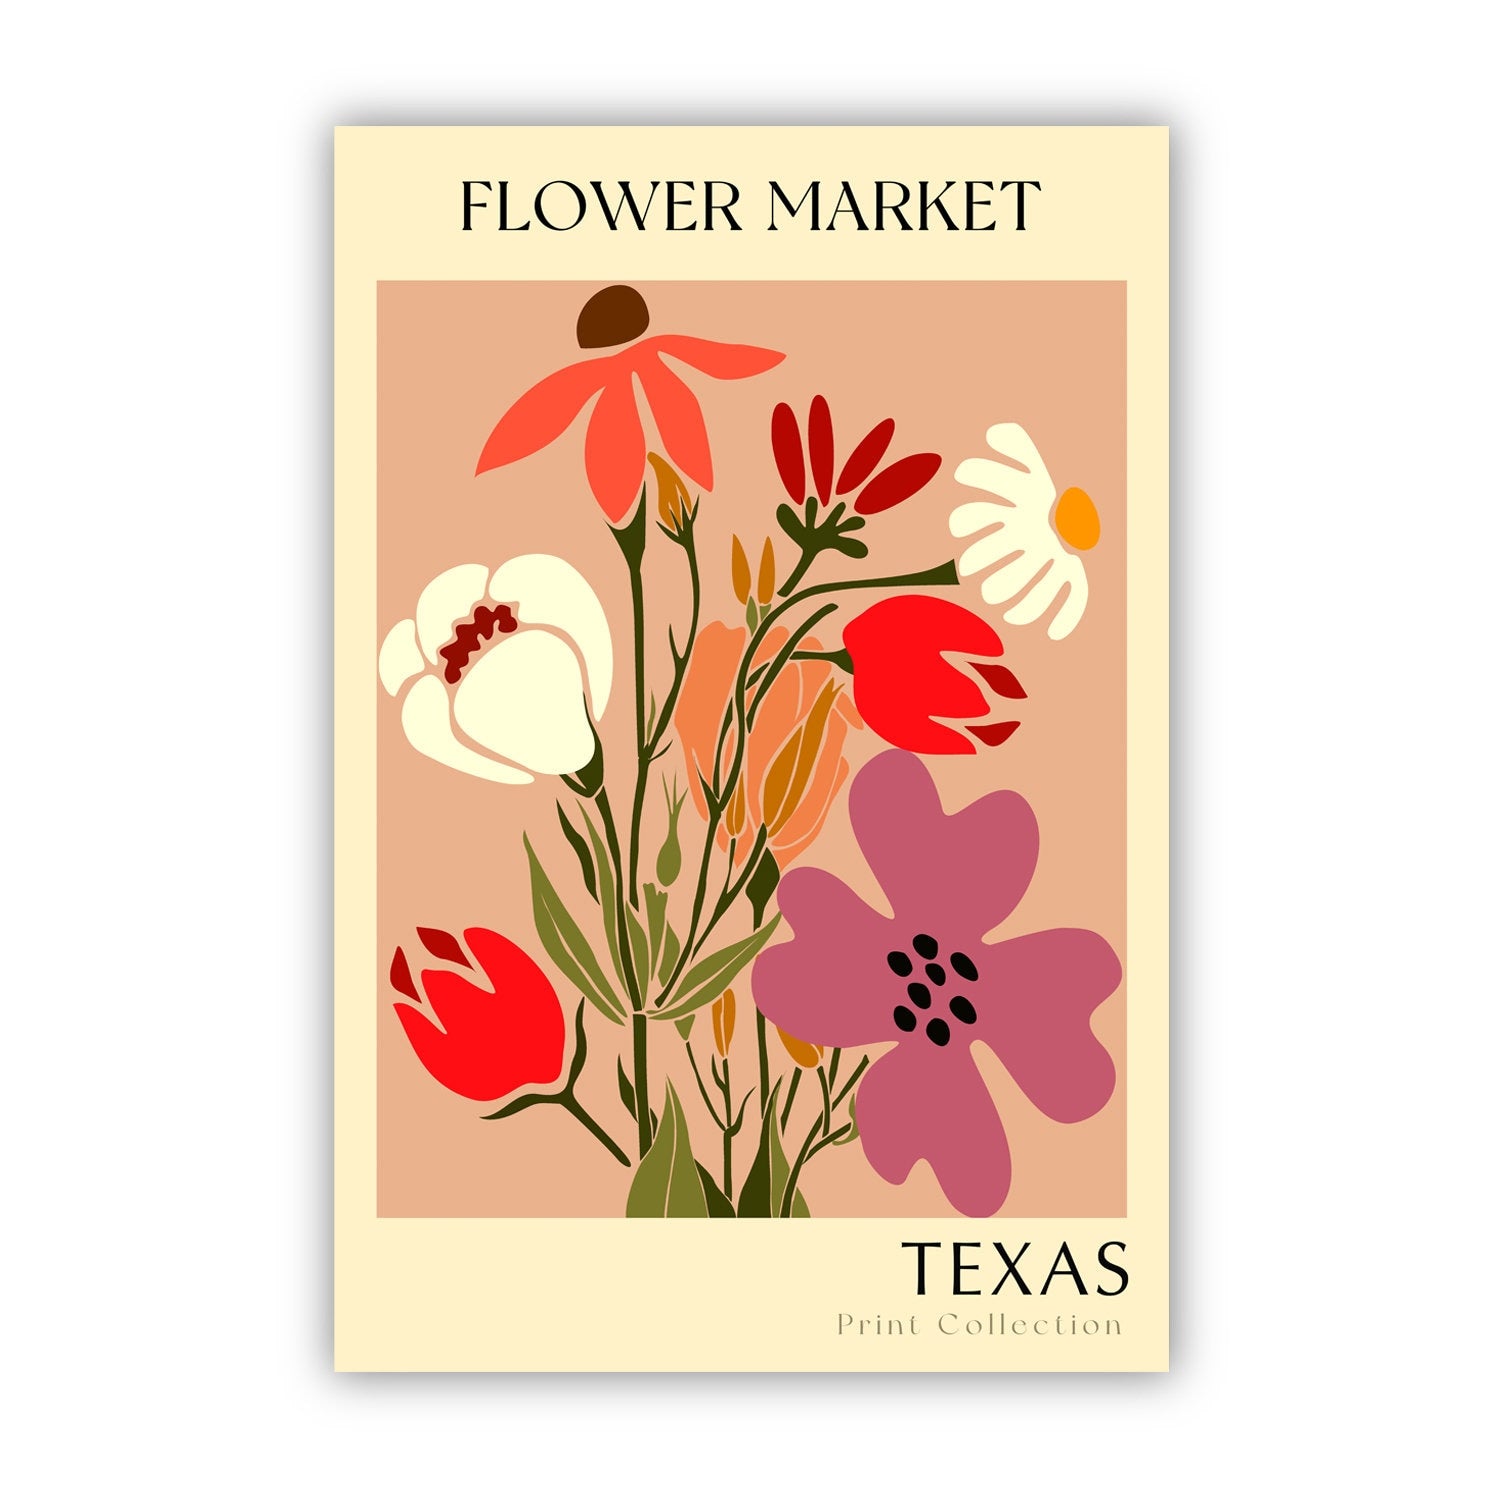 Texas State flower print, USA states poster, Texas flower market poster, Botanical poster, Nature poster artwork, Boho floral wall art